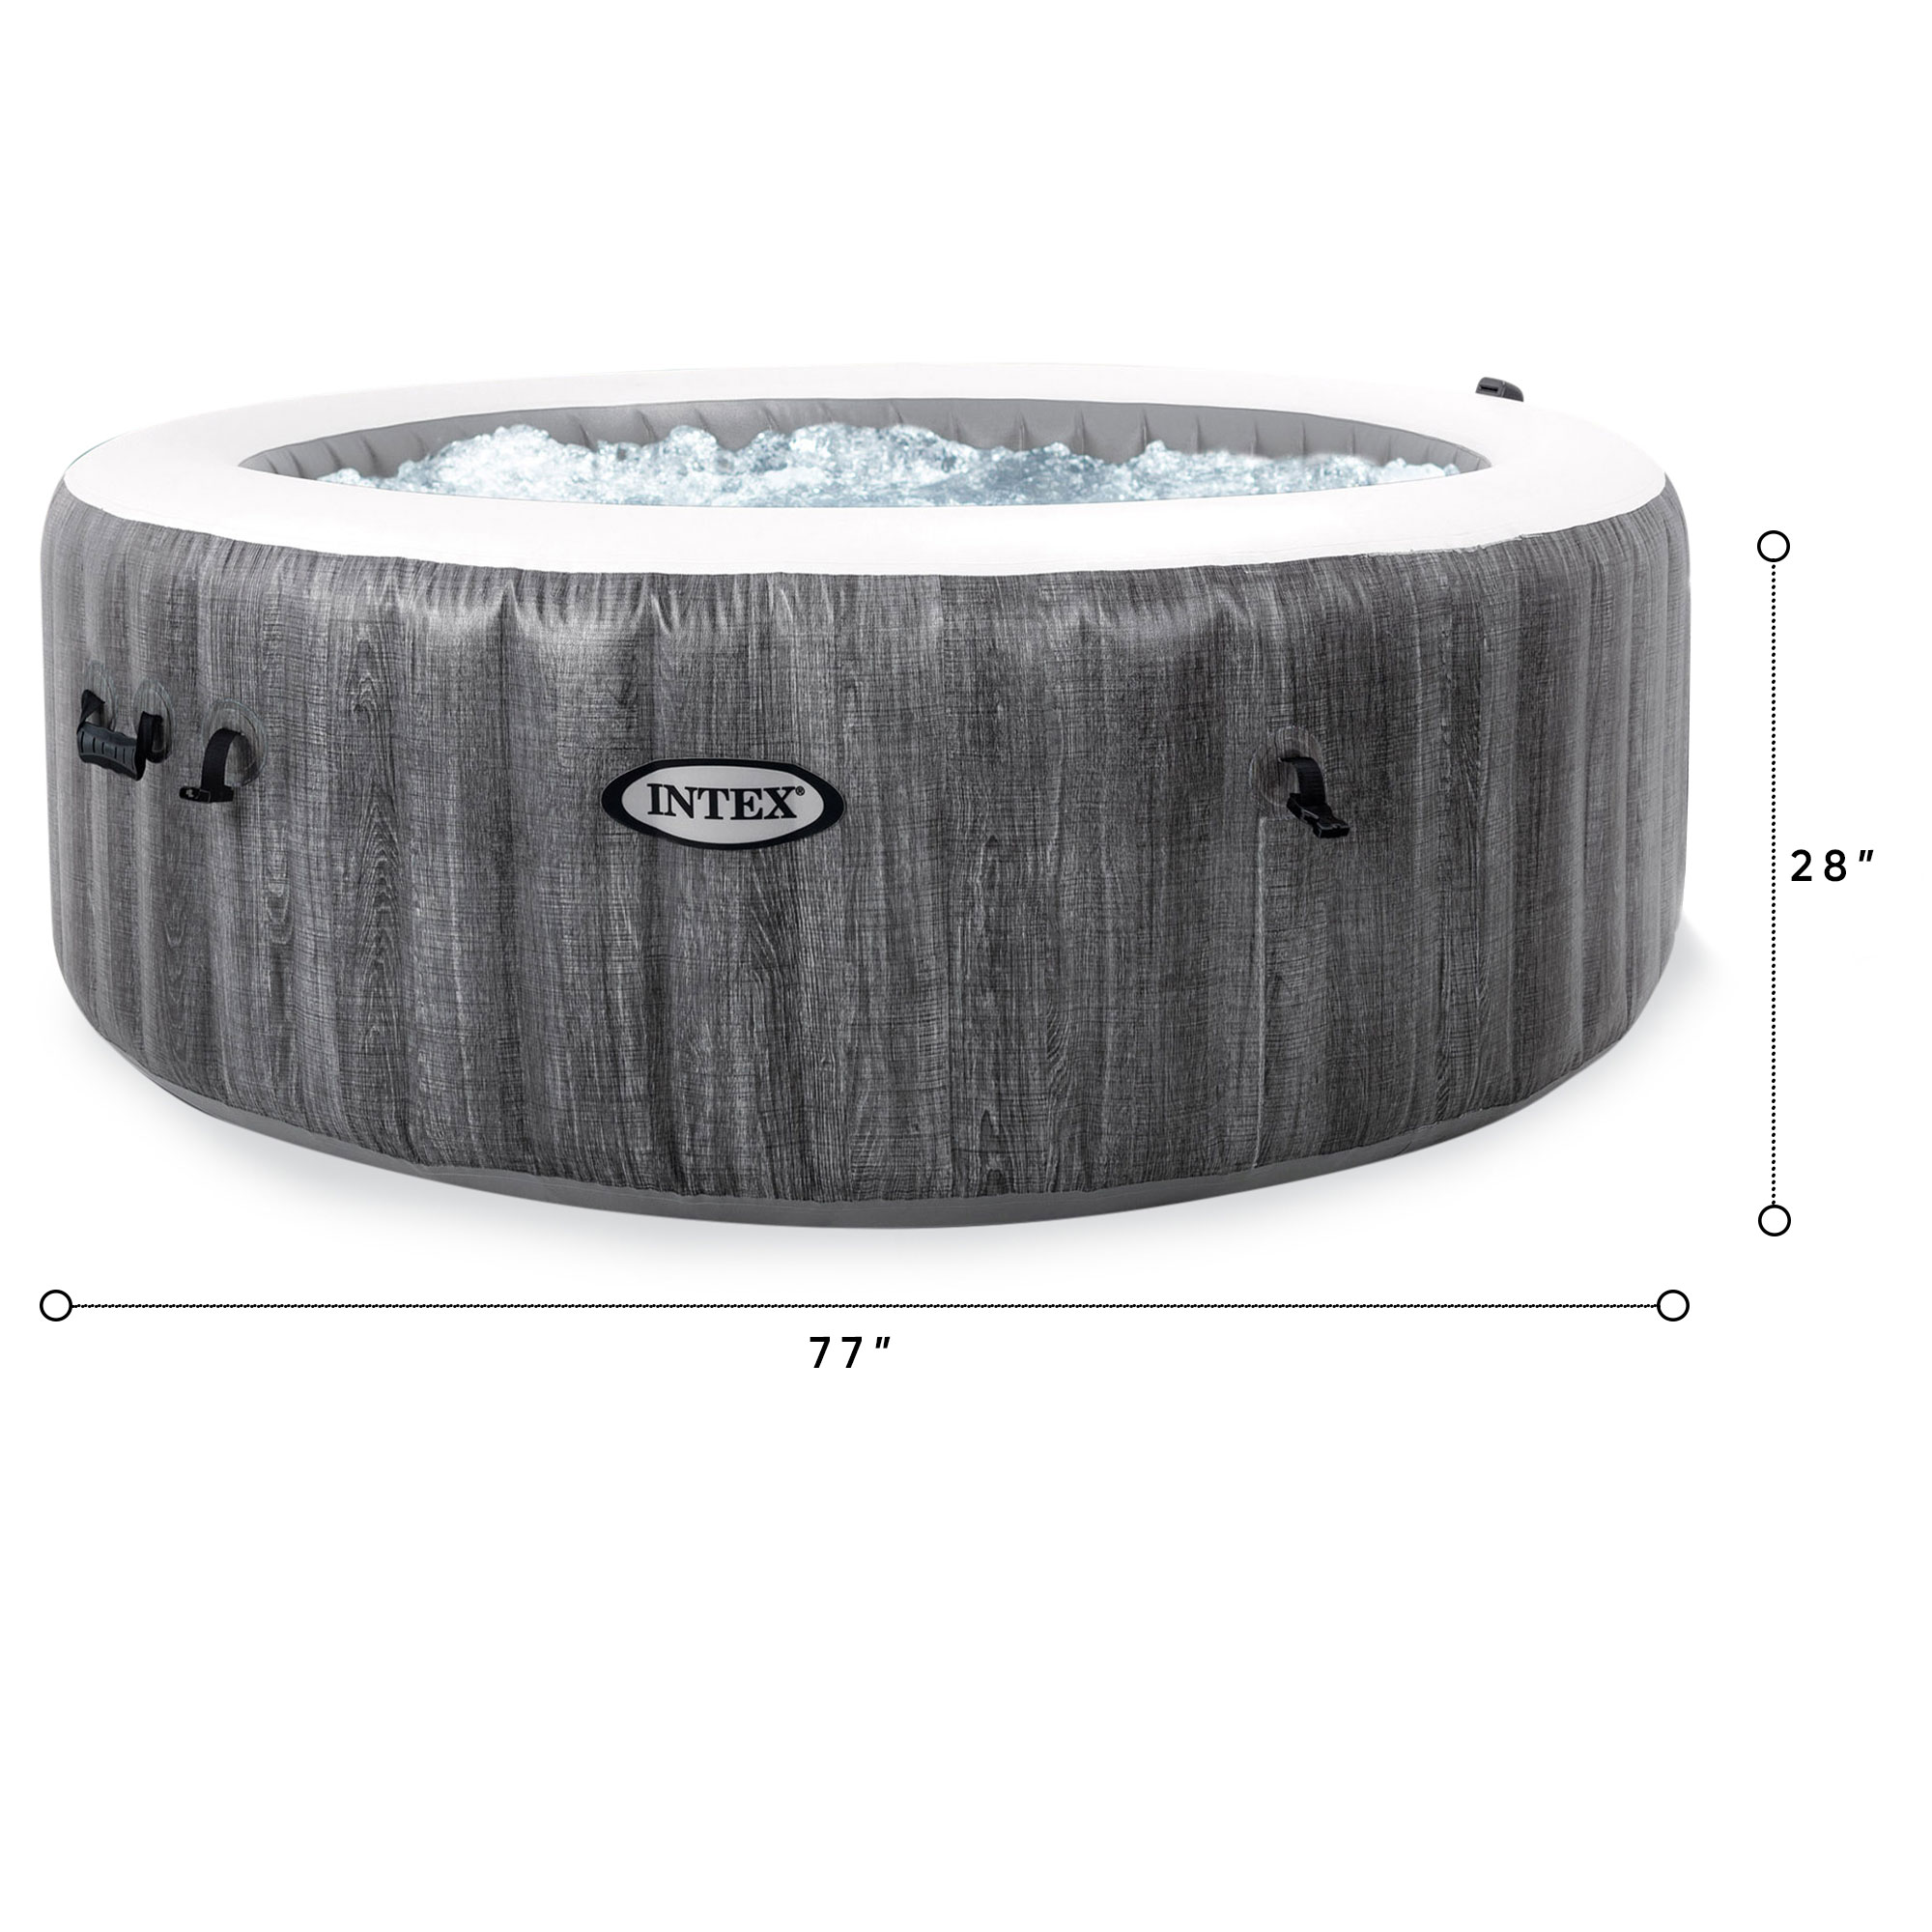 Intex PureSpa Plus Greywood Inflatable Hot Tub Bubble Jet Spa, 77 x 28